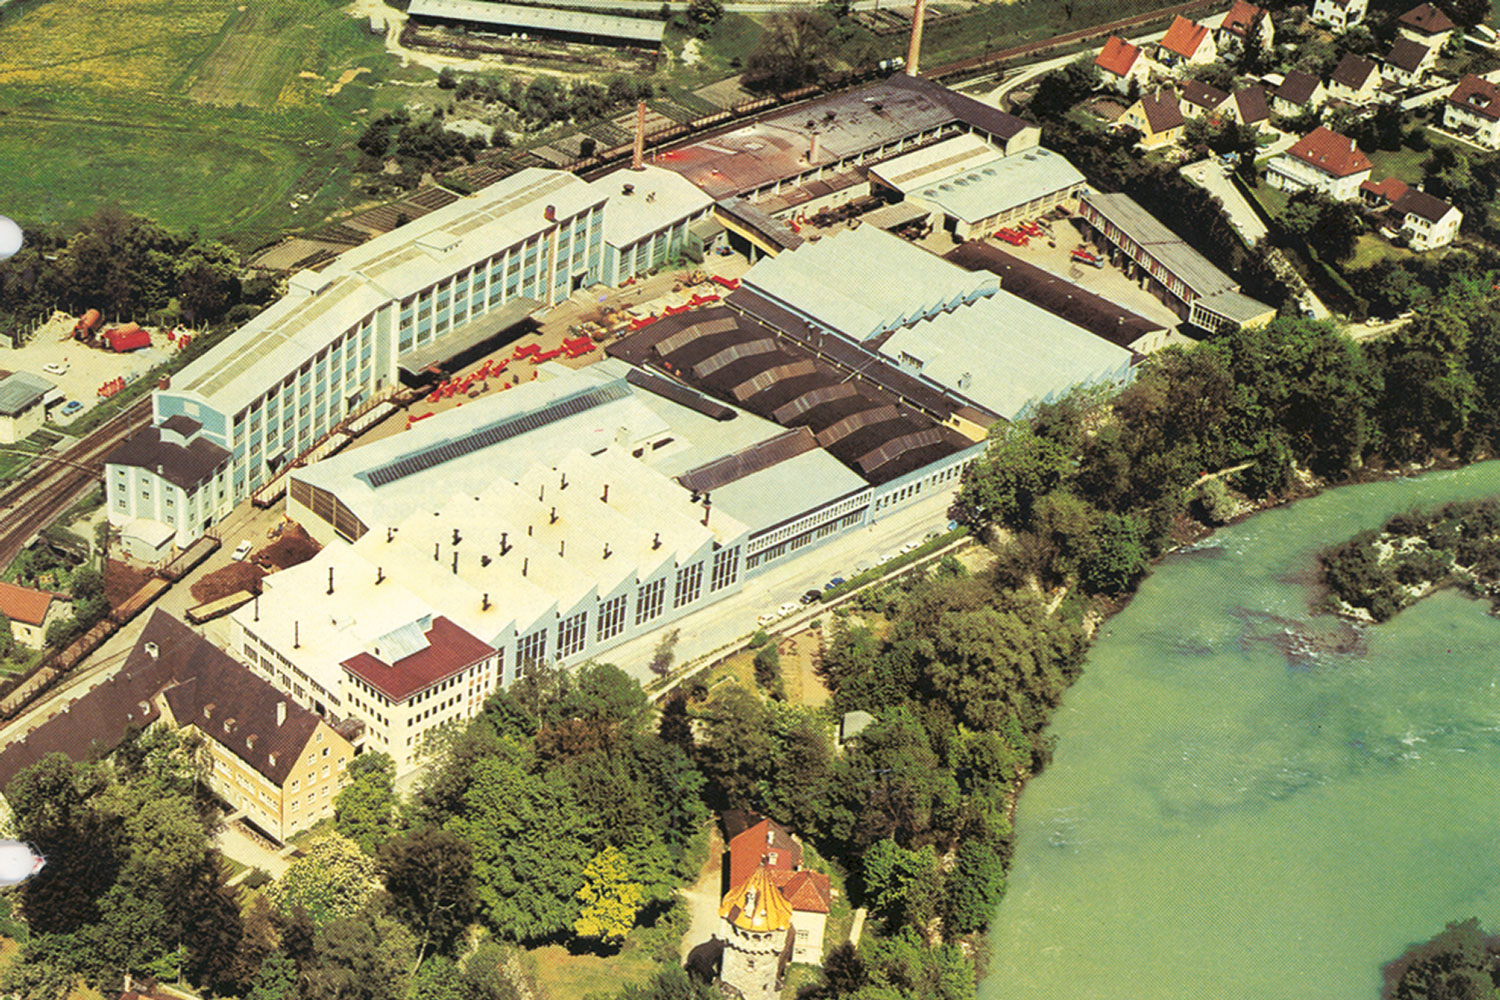 L'imponente Bayerische Pflugfabrik (Fabbrica Bavarese di aratri) di Landsberg tra le rotaie ferroviarie ed il fiume Lech.